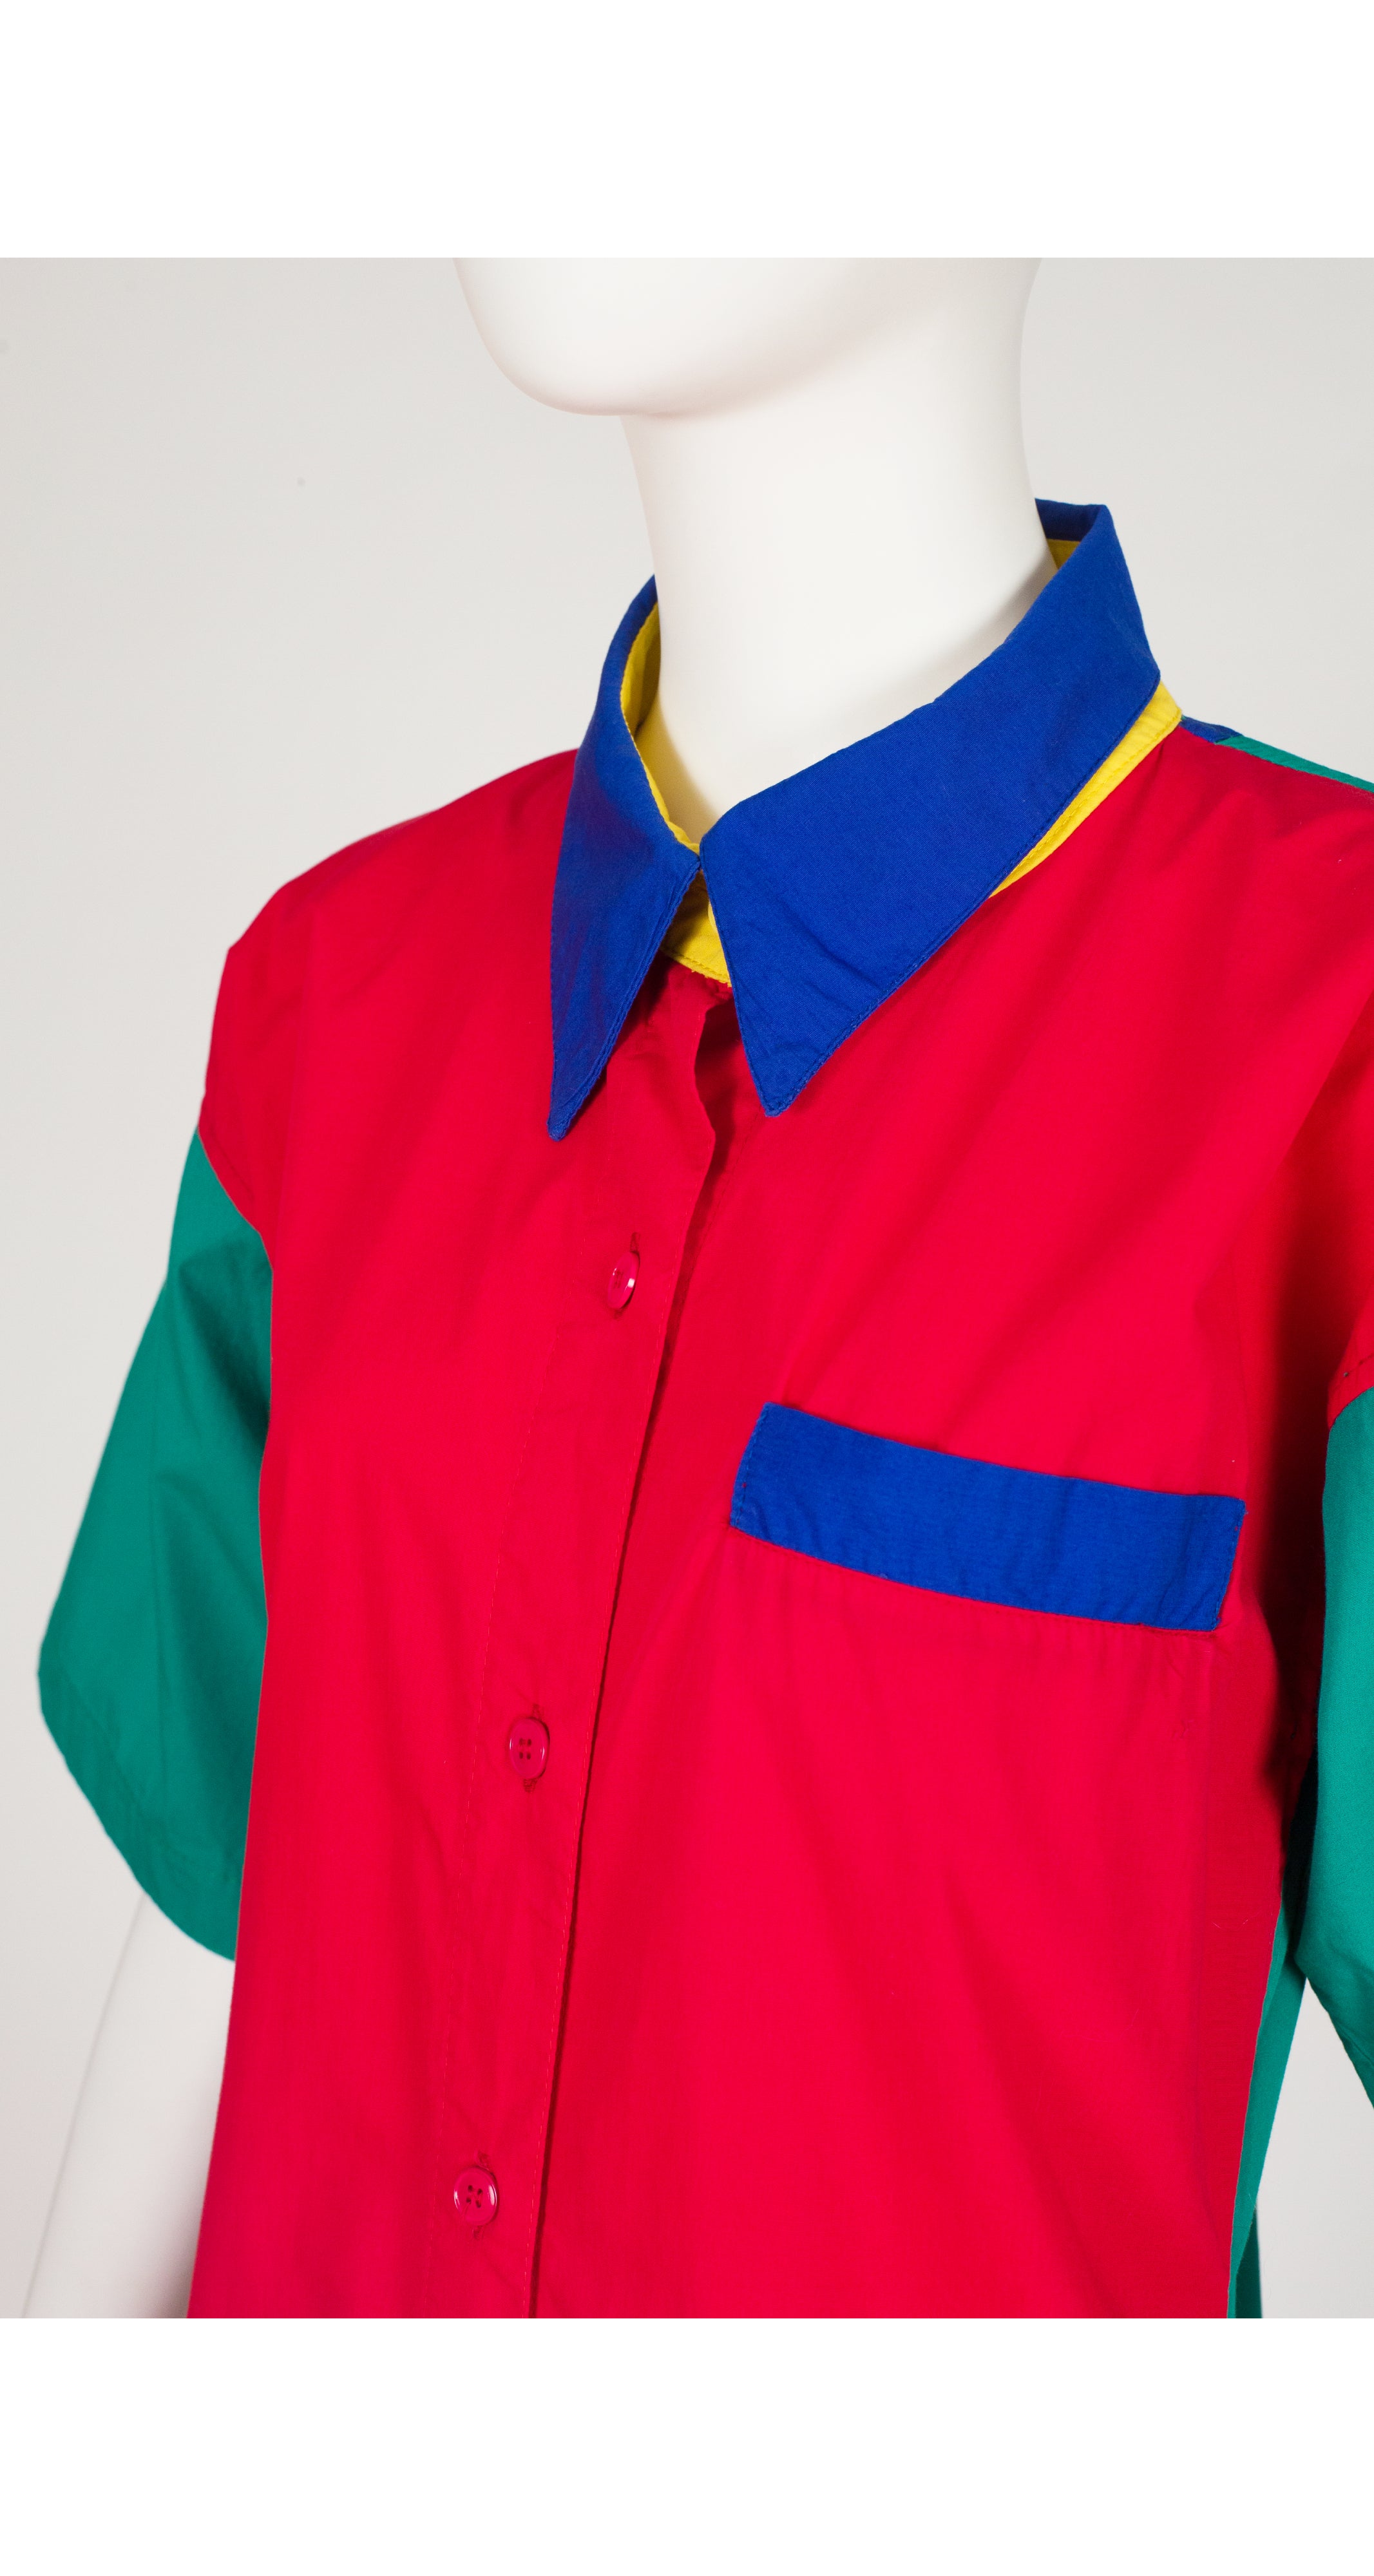 1988 S/S Documented Color Block Cotton Shirt Dress